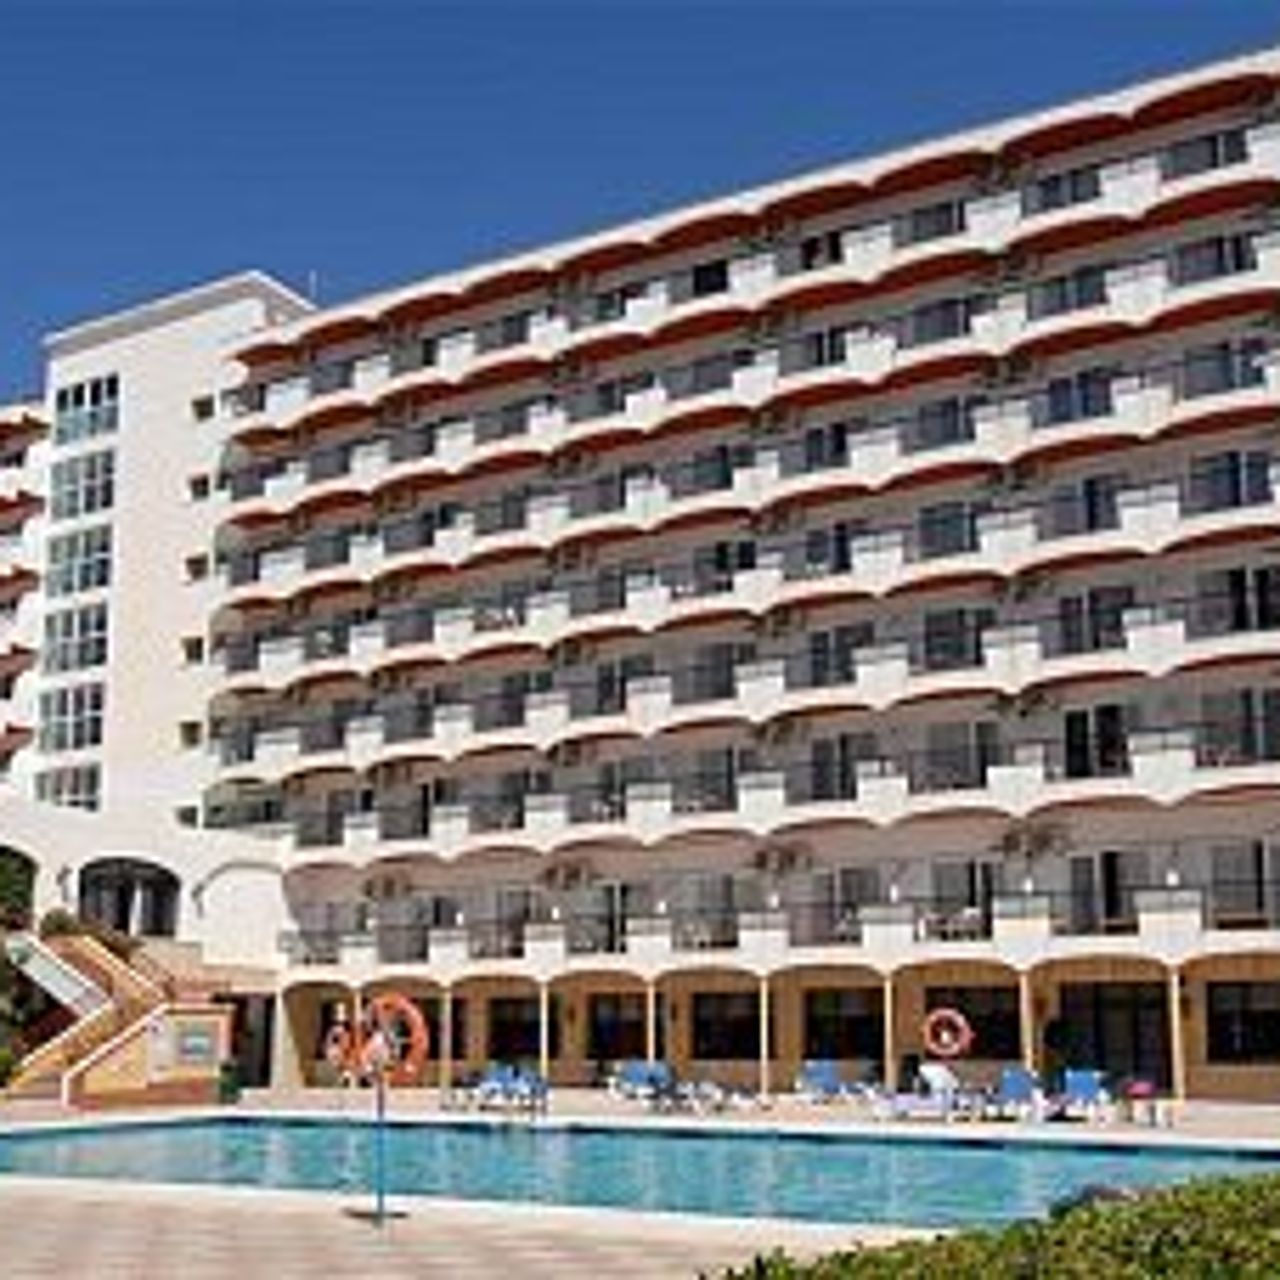 Hotel Monarque Fuengirola Park - HOTEL INFO